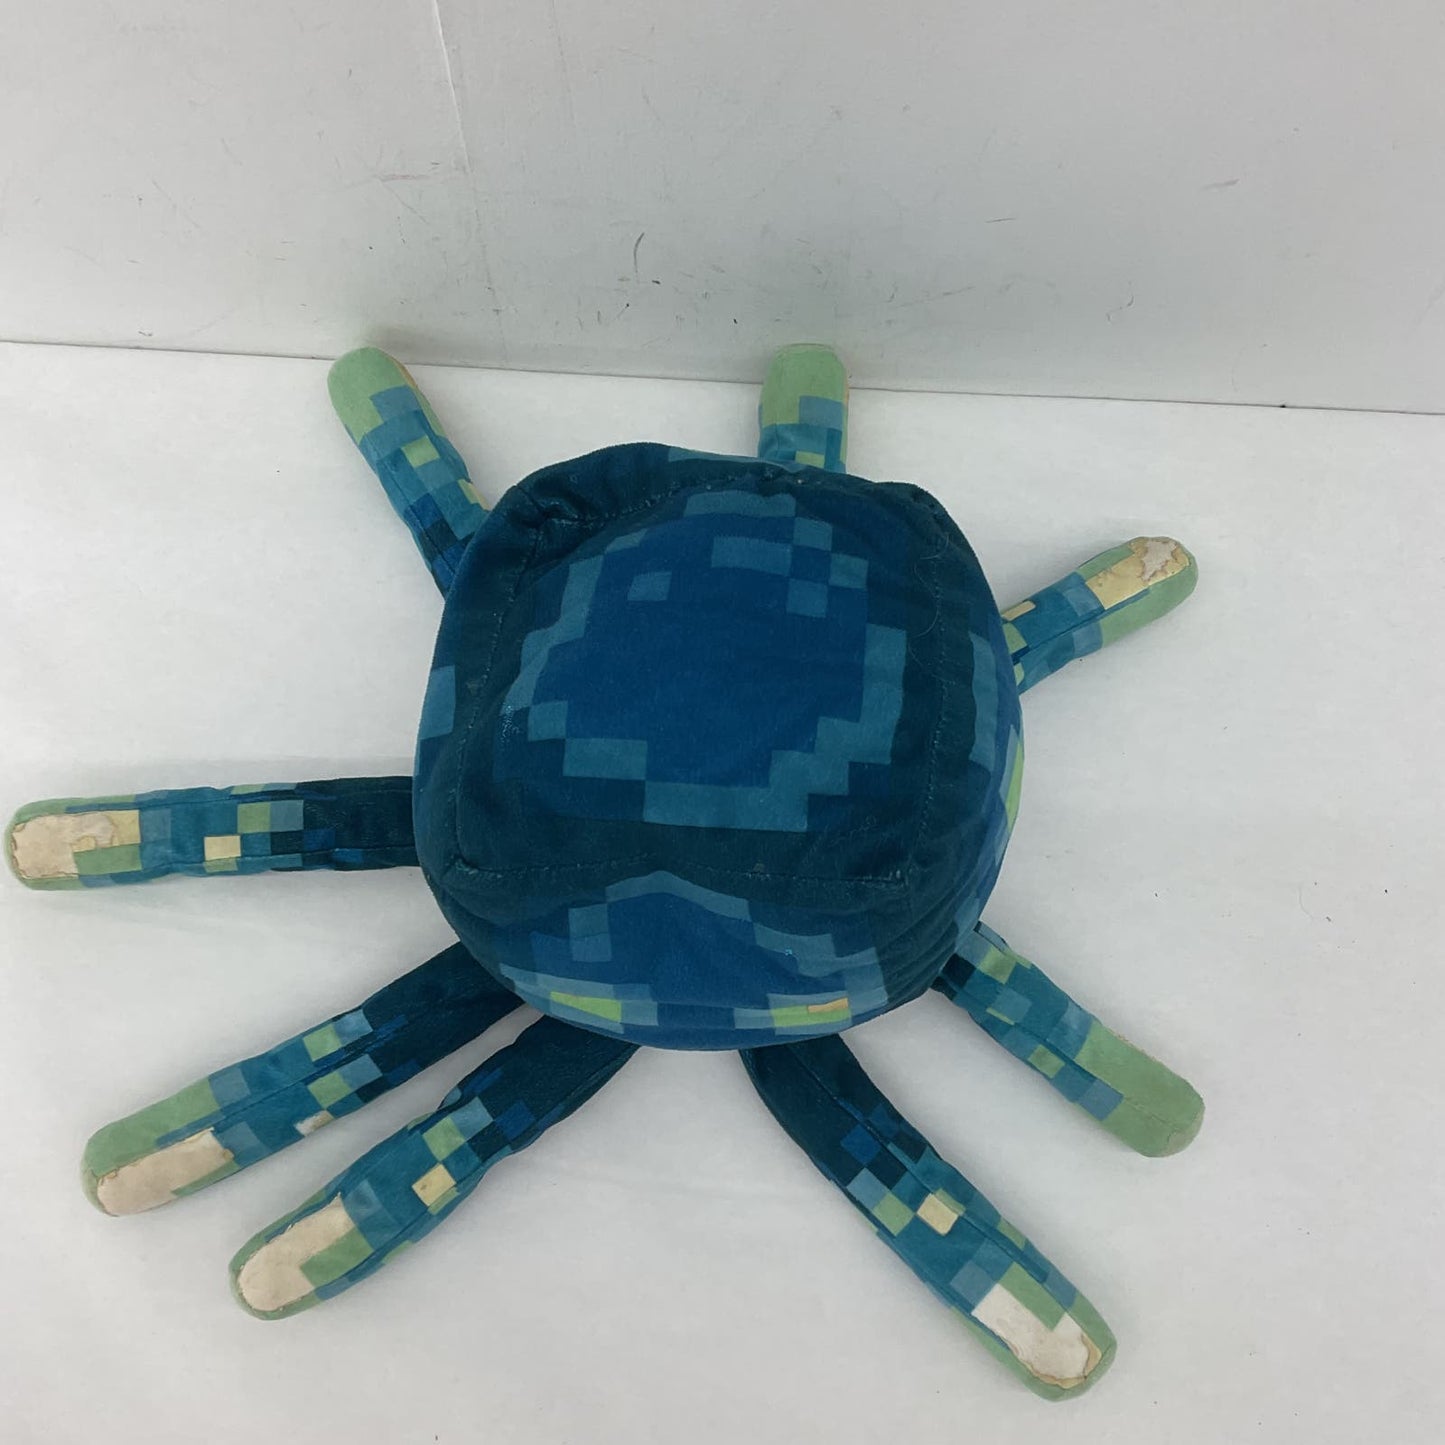 Minecraft Blue Stuffed Animal Toy Octopus Video Game Plush - Warehouse Toys